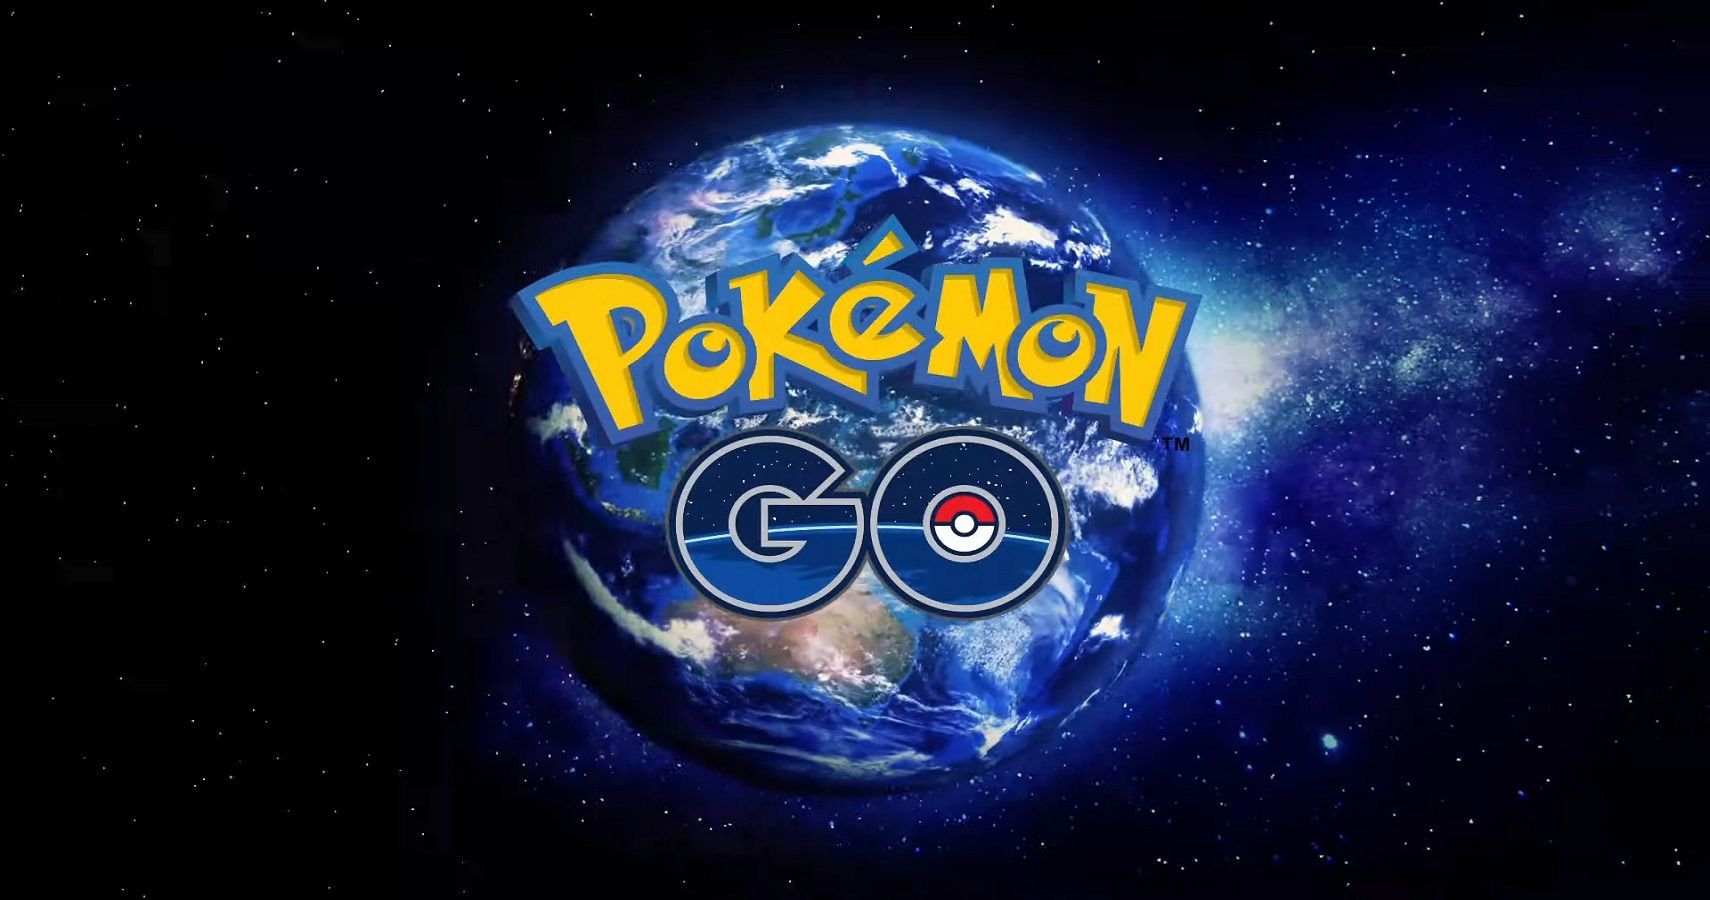 Pokemon Go Has Made $5 Billion